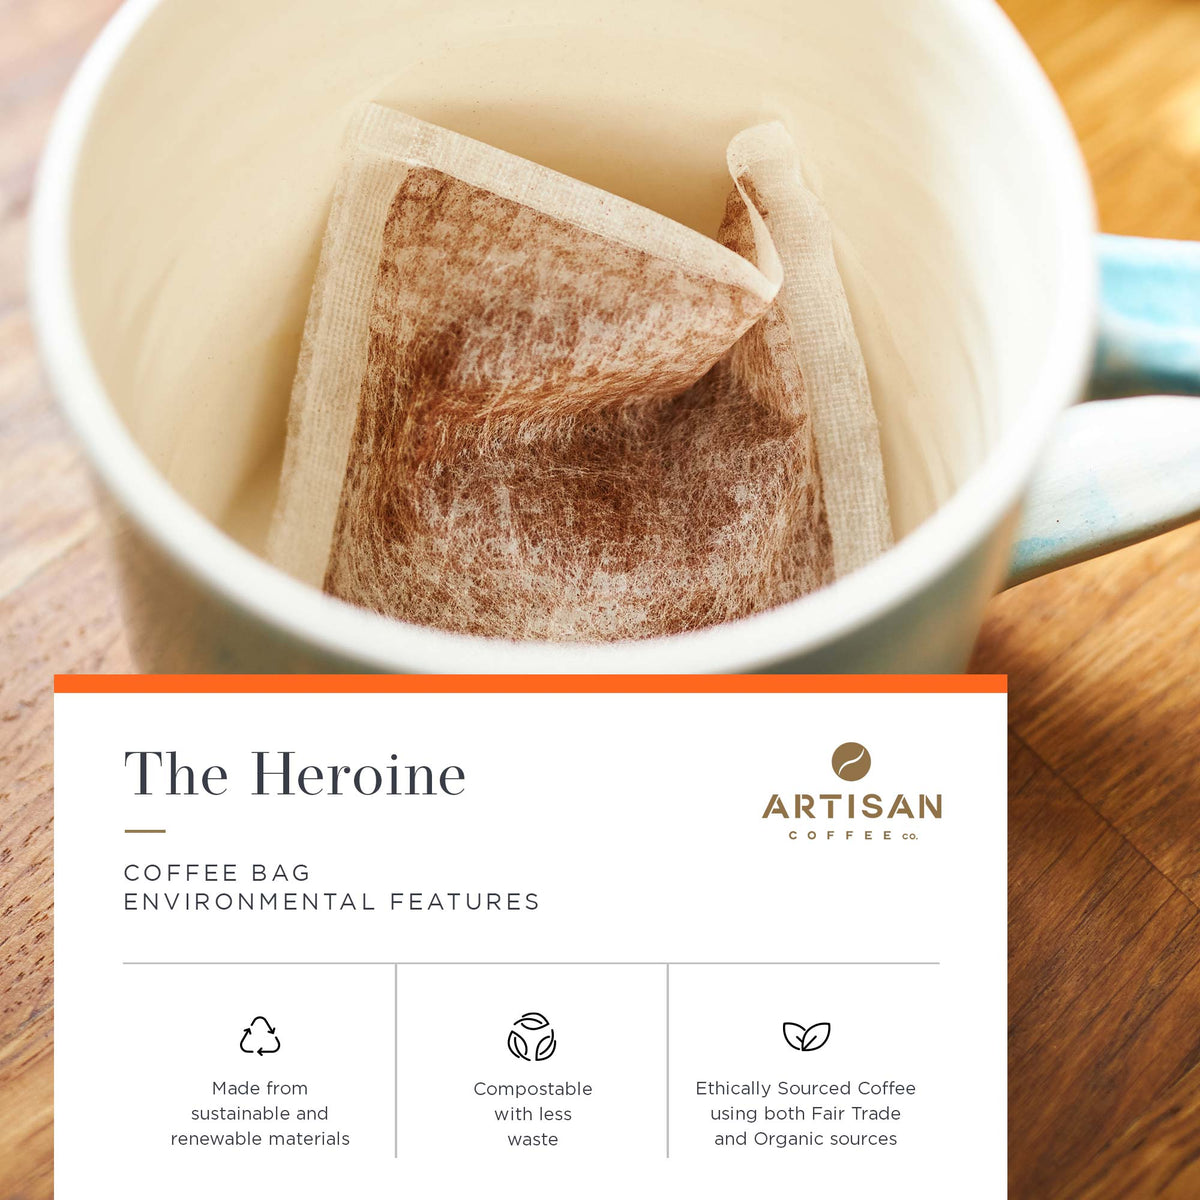 Artisan Coffee Co The Heroine Coffee bags Infographic Environmental